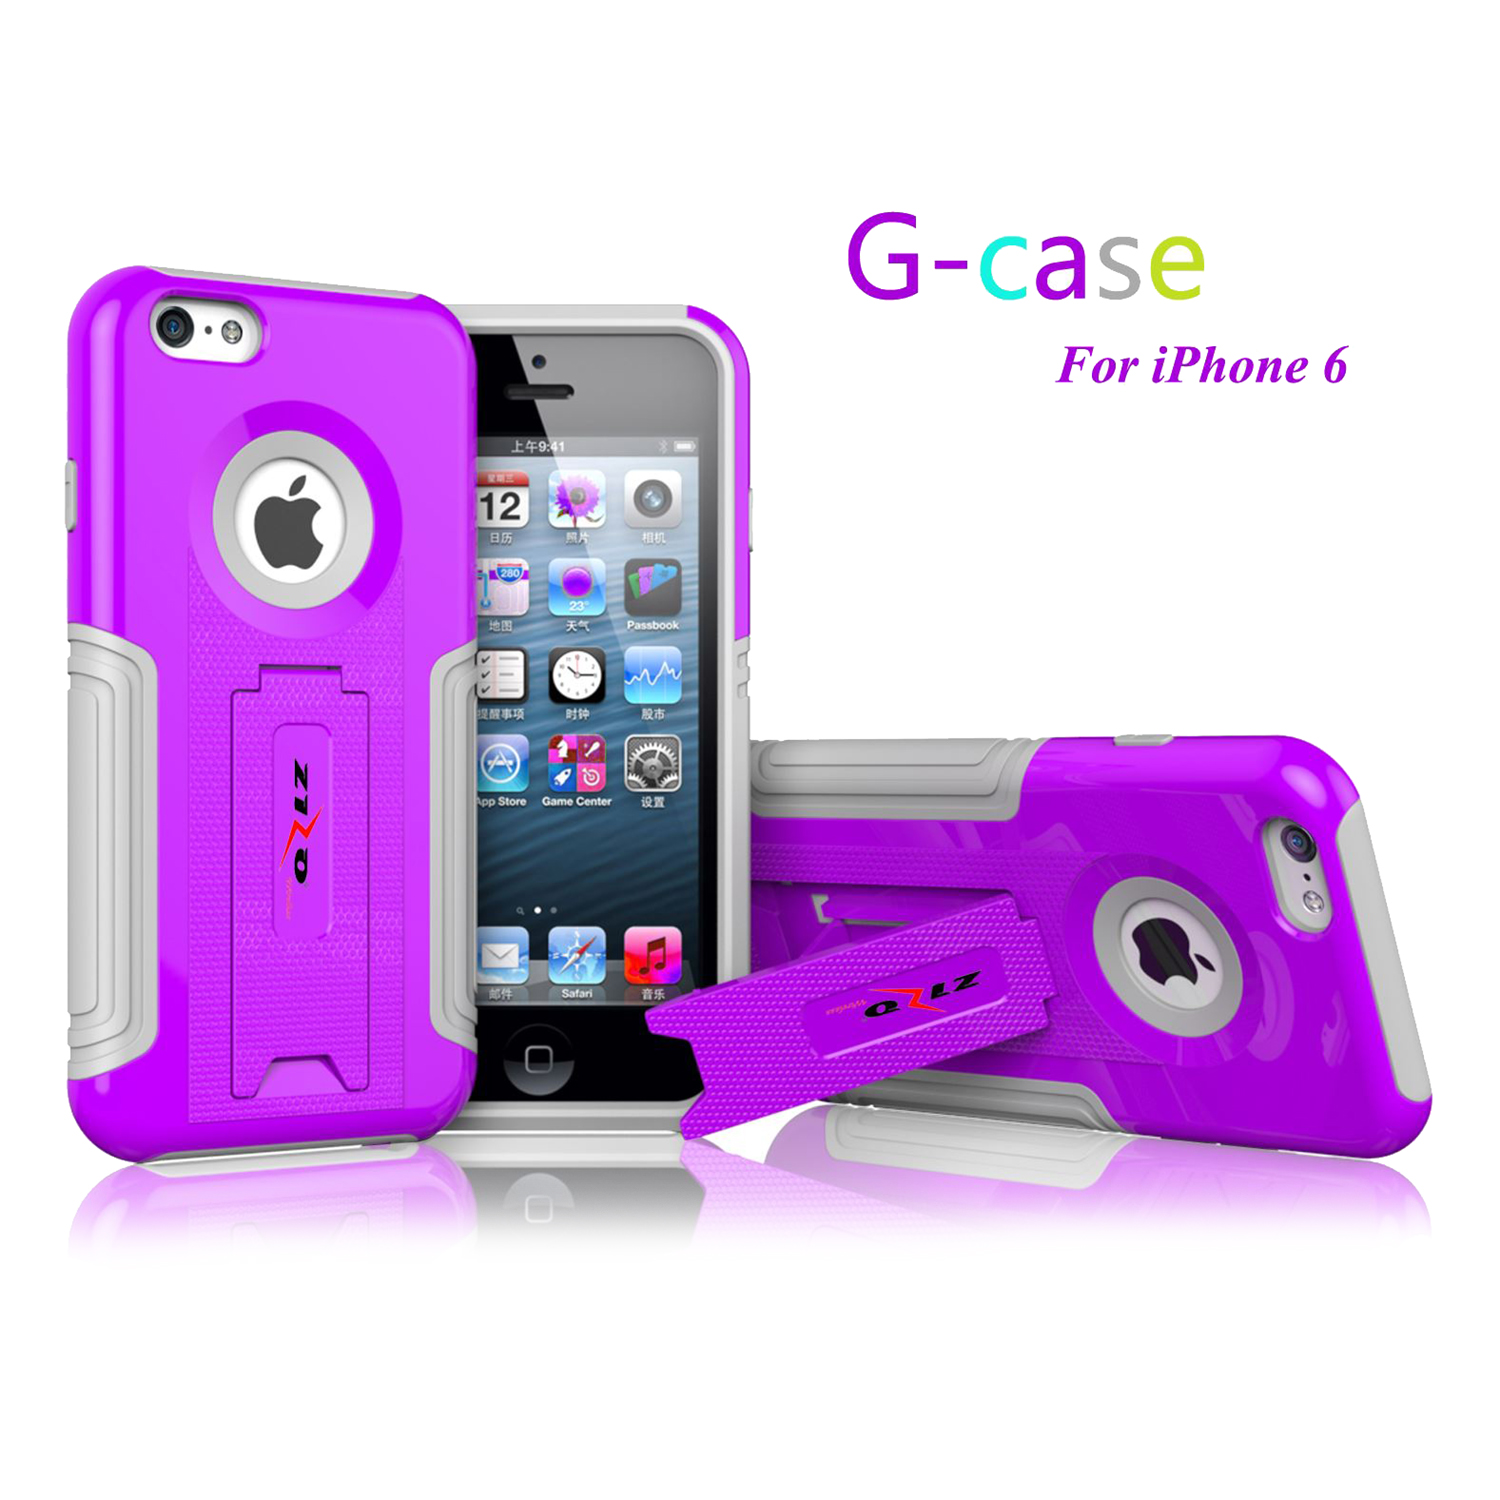 For iPhone 6 - GCASE PC + Gray TPU Combo Cover w/ Kickstand - Purple HYB